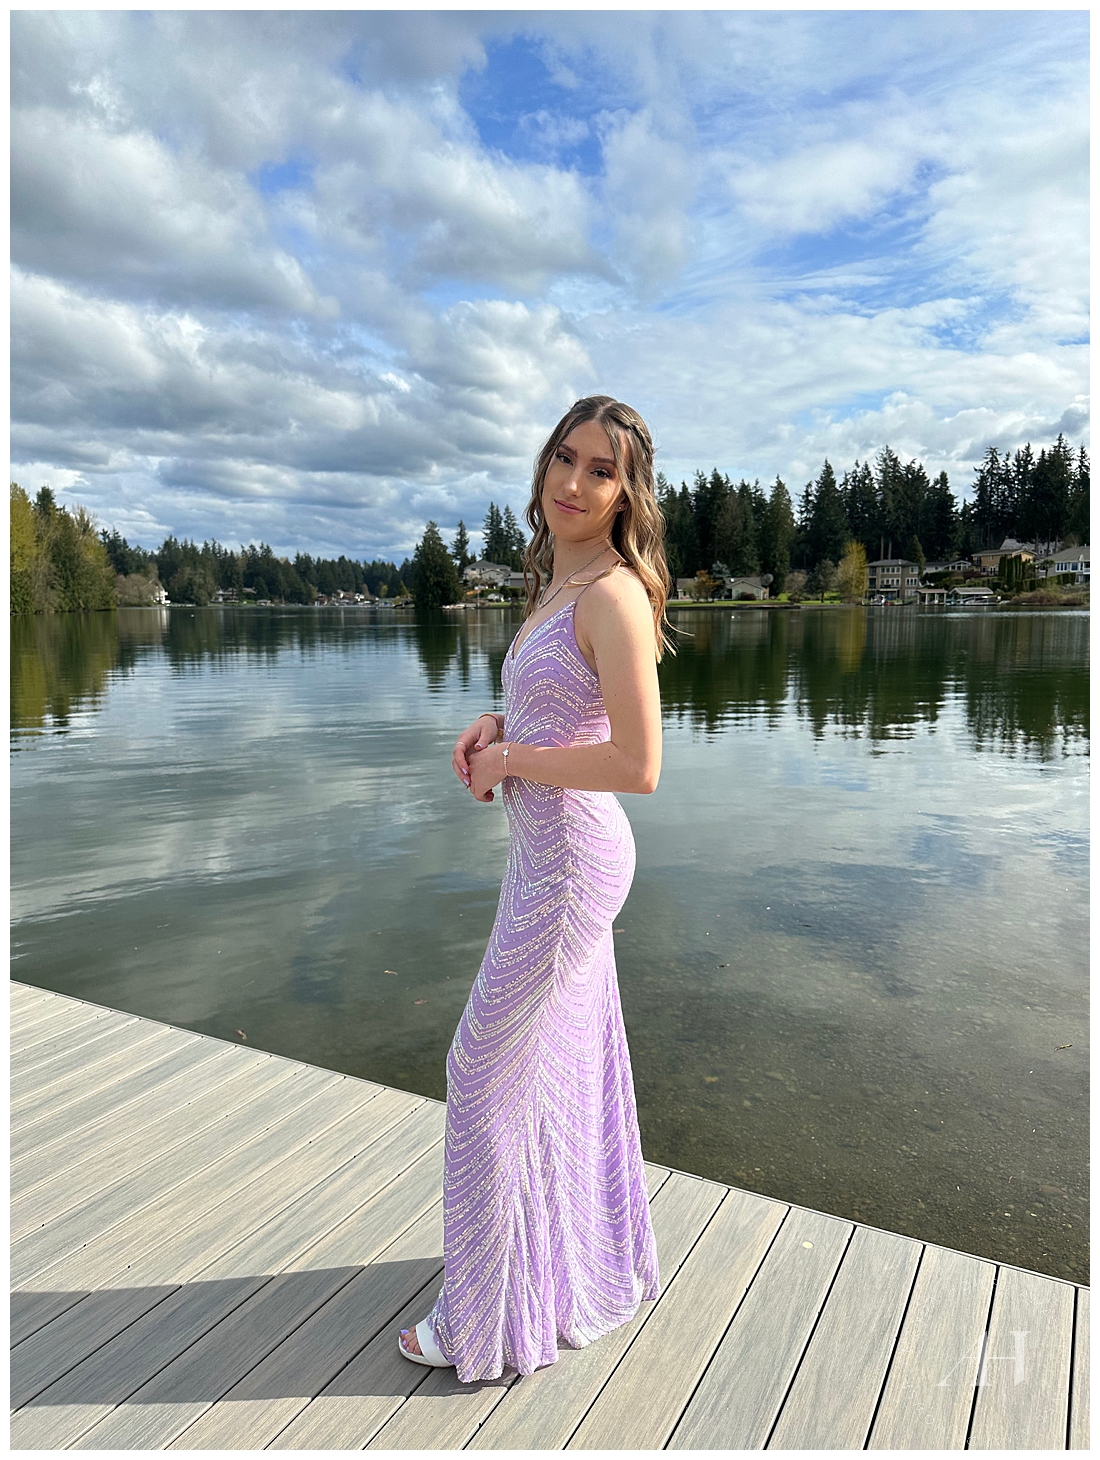 Lakeside Senior Prom Photos in Purple Dress | Amanda Howse Photography